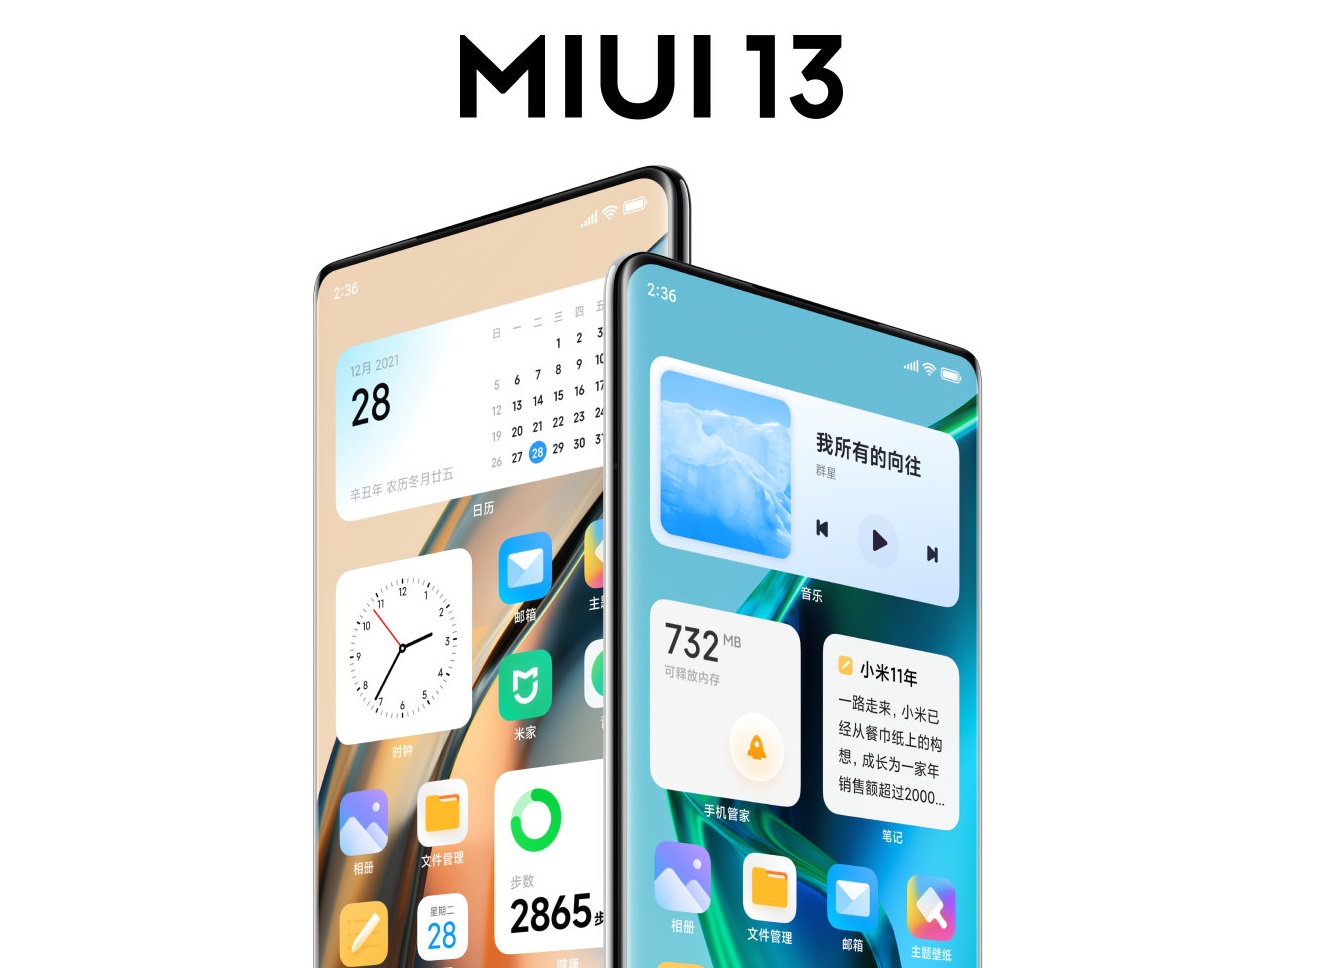 Xiaomi hat die Firmware MIUI 13 Pad, MIUI Fold, MIUI TV und MIUI Home eingeführt